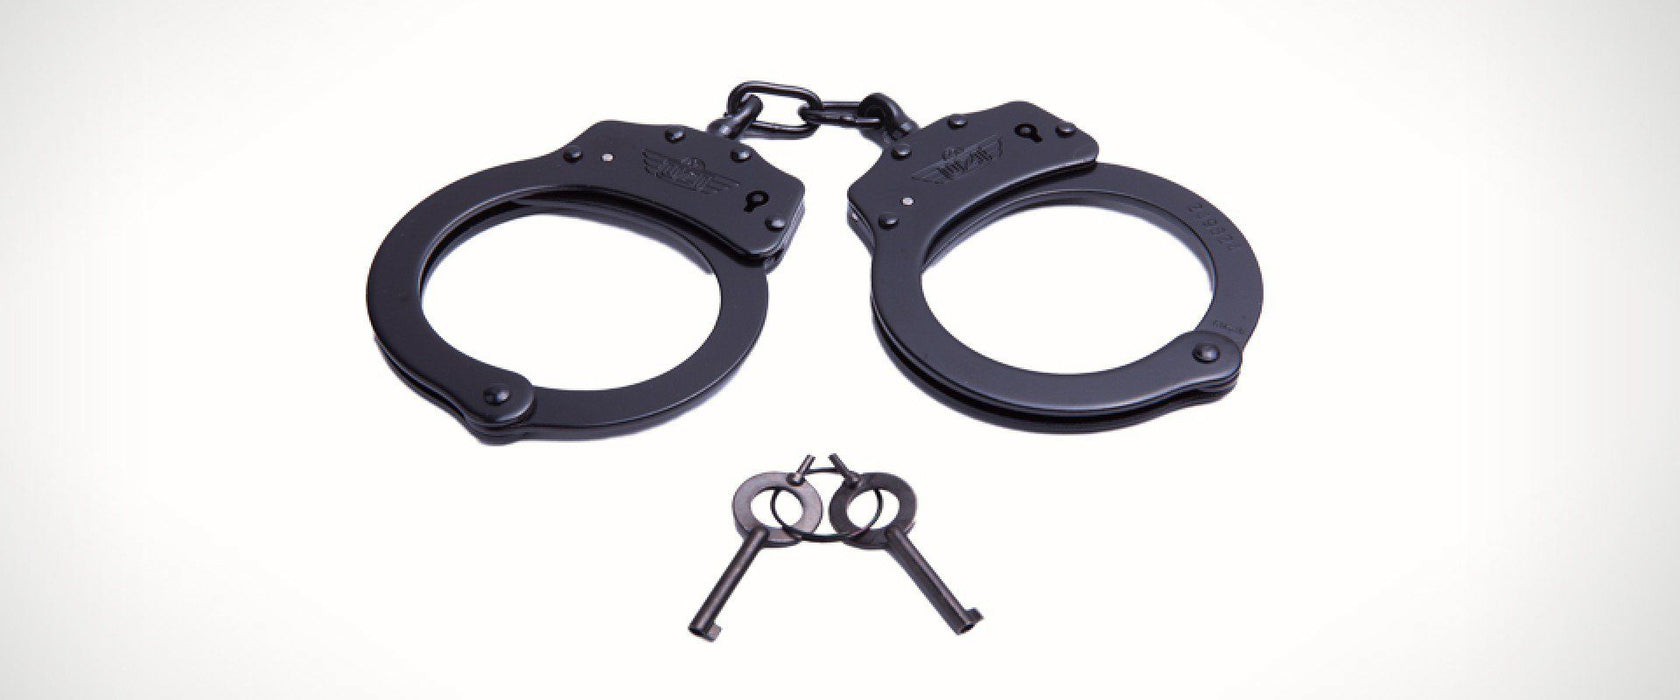 UZI Chain Handcuffs (Black)